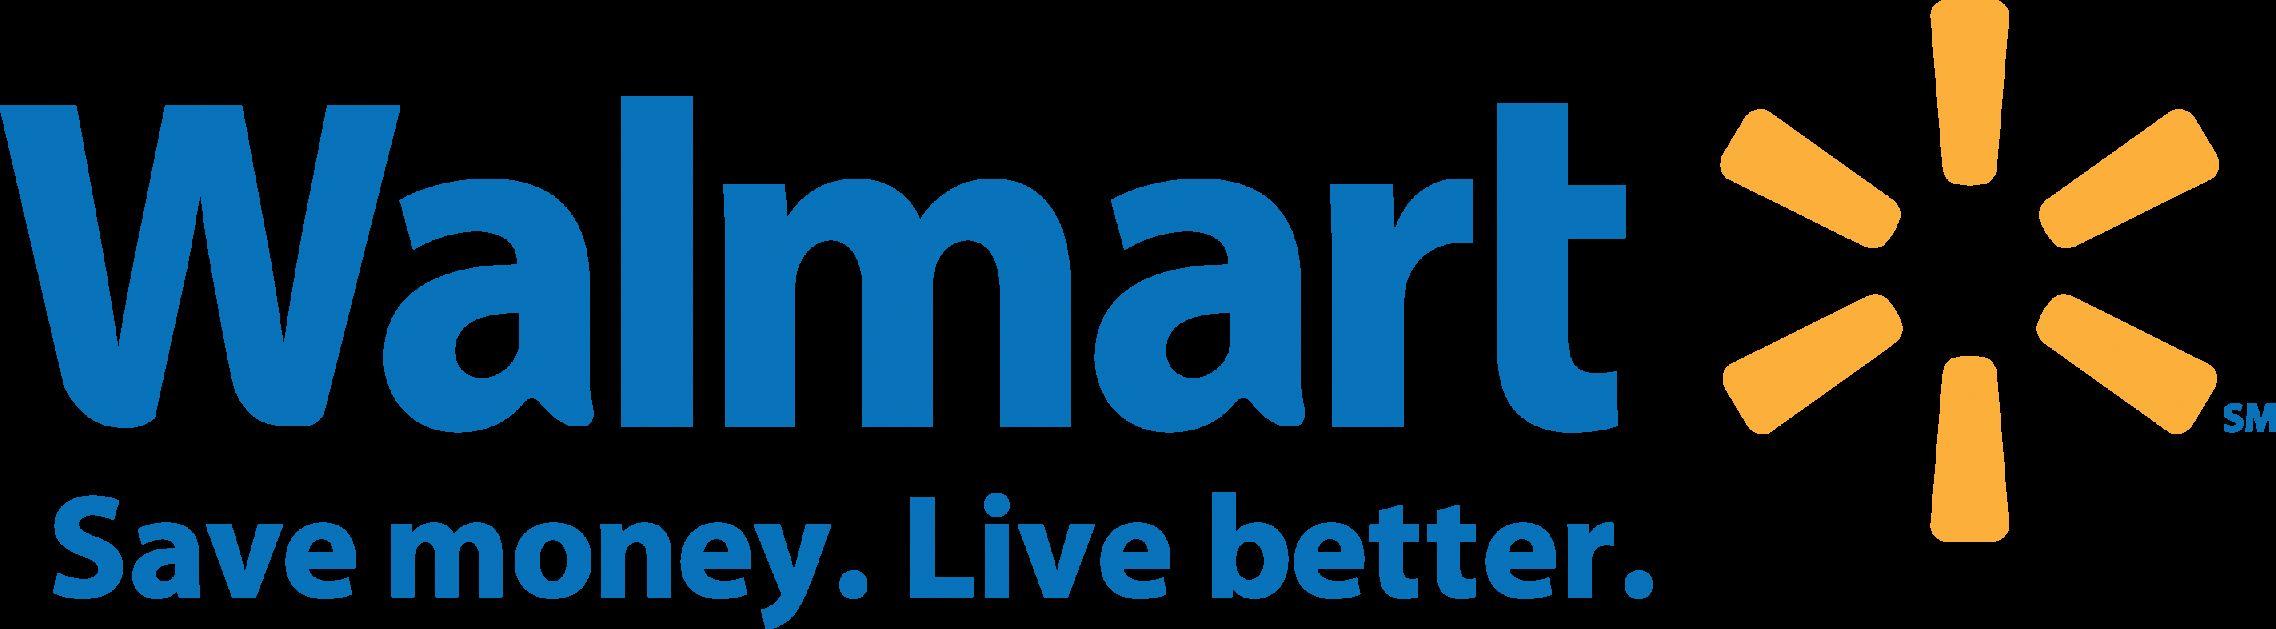 Walmart.com Save Money Live Better Logo - LogoDix